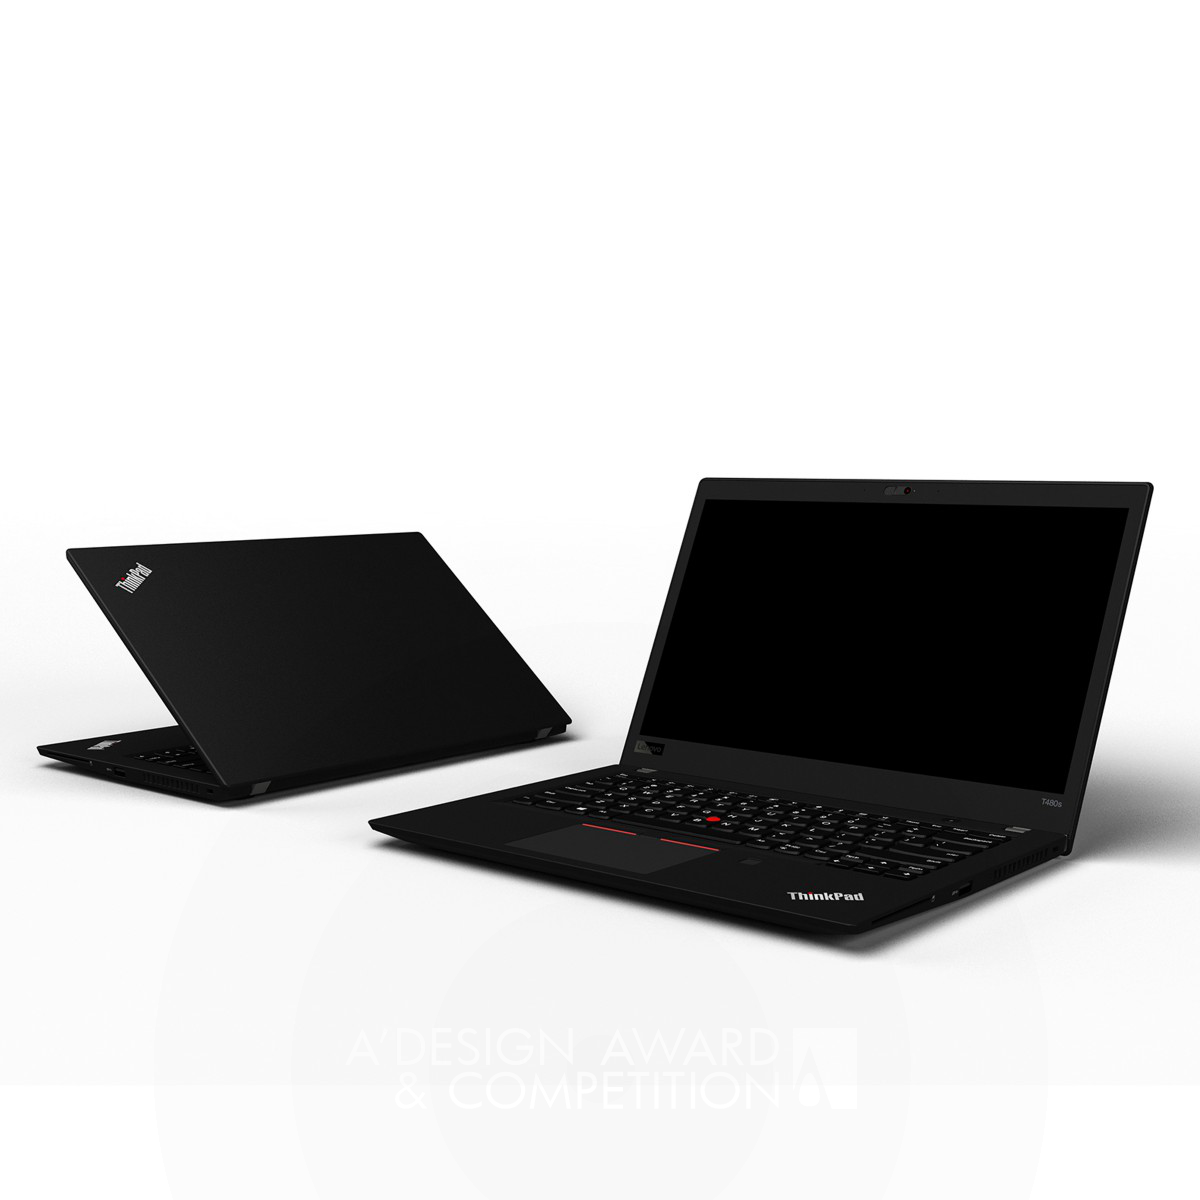 Lenovo Design Group Laptop Computers